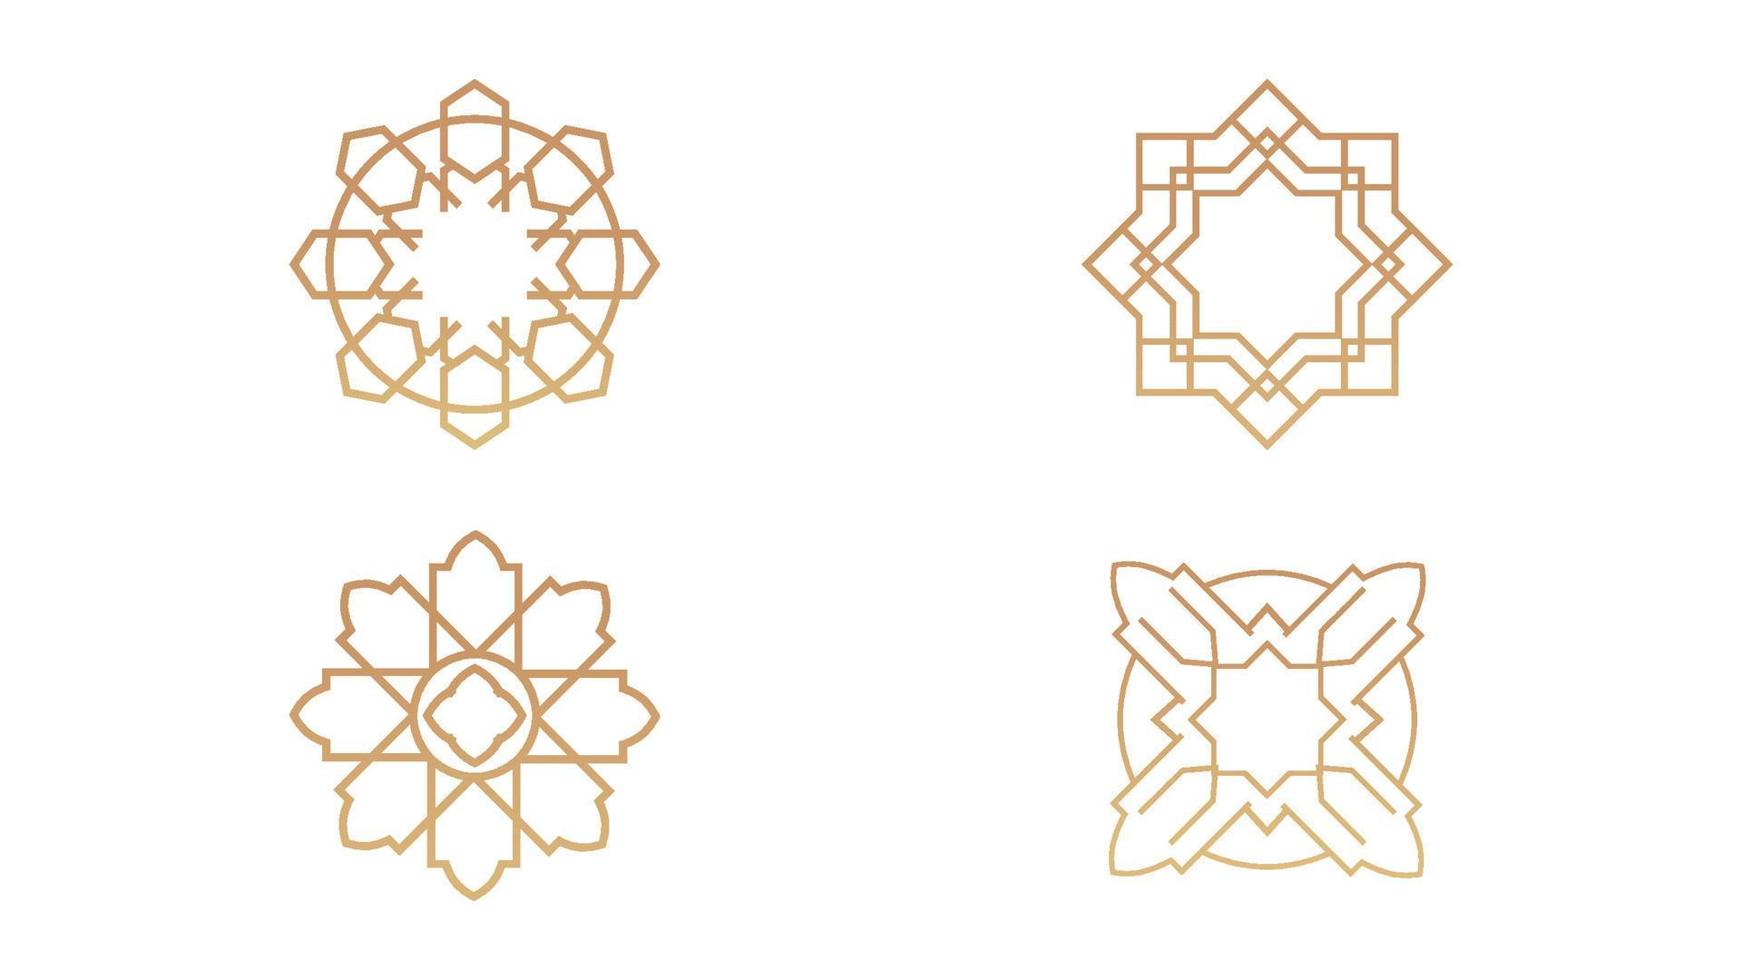 fyra islamic former ornament isolerat på vit bakgrund. vektor